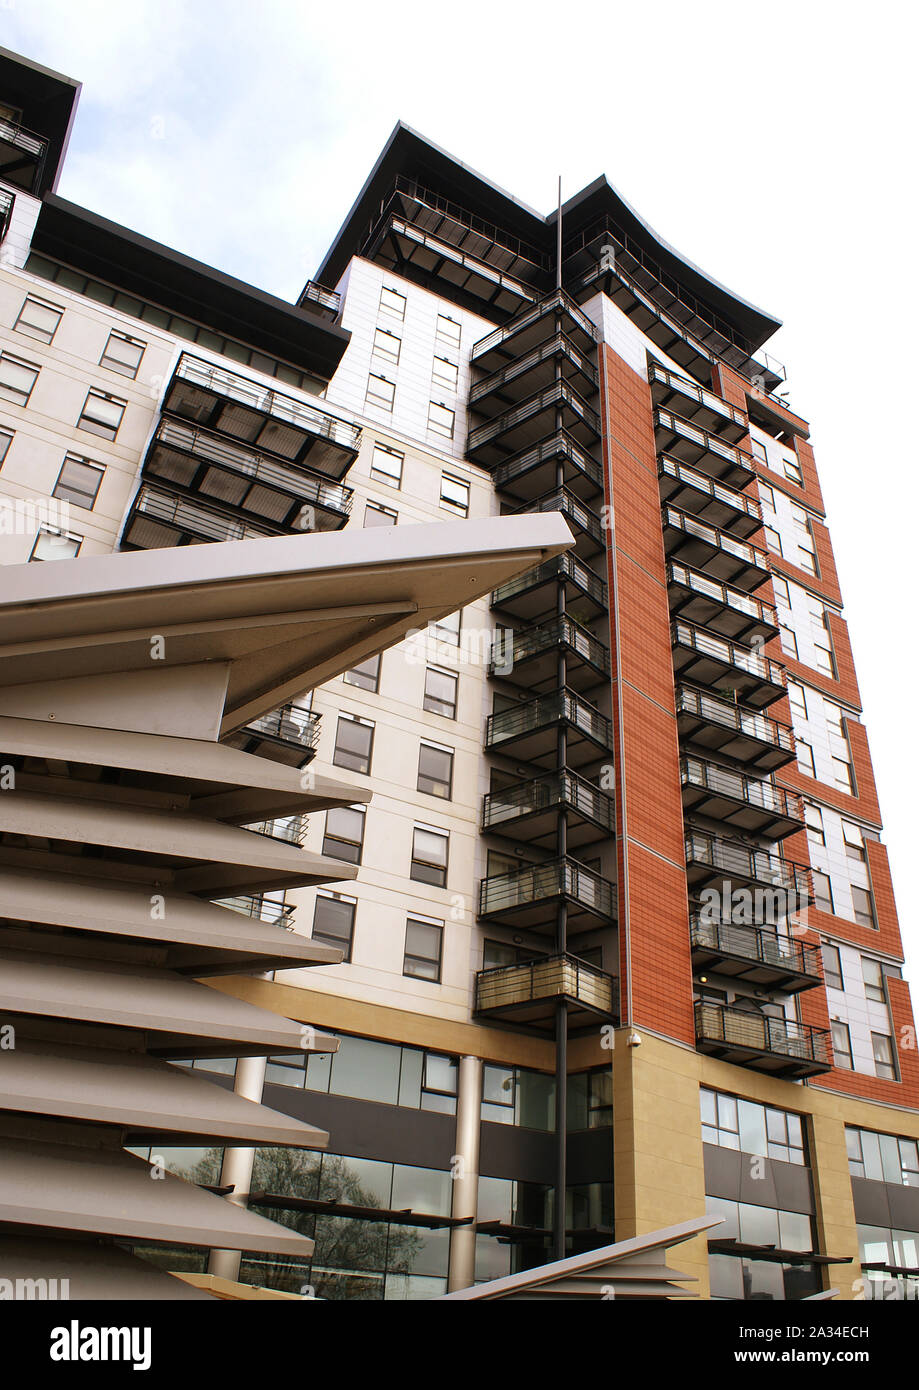 SKYLINE, moderno blocco di appartamenti St. Peters Street, Leeds Foto Stock